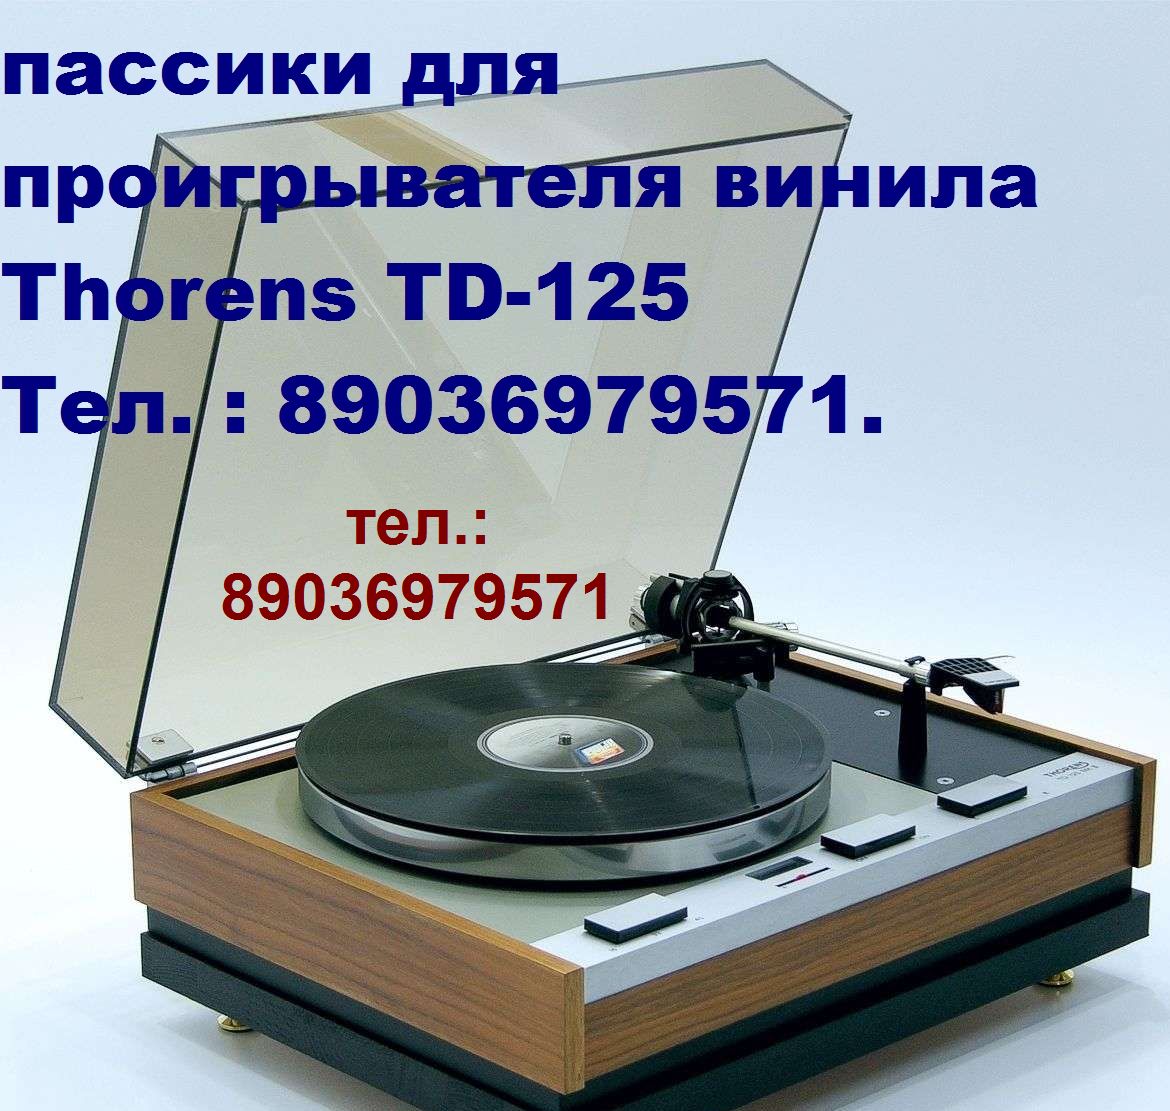 Пассик для Thorens TD 320 290 325 295 280 125 TD 319 TD 316 ремень пасик Thorens Торенс пассик для Thorens TD  в городе Москва, фото 2, телефон продавца: +7 (903) 697-95-71